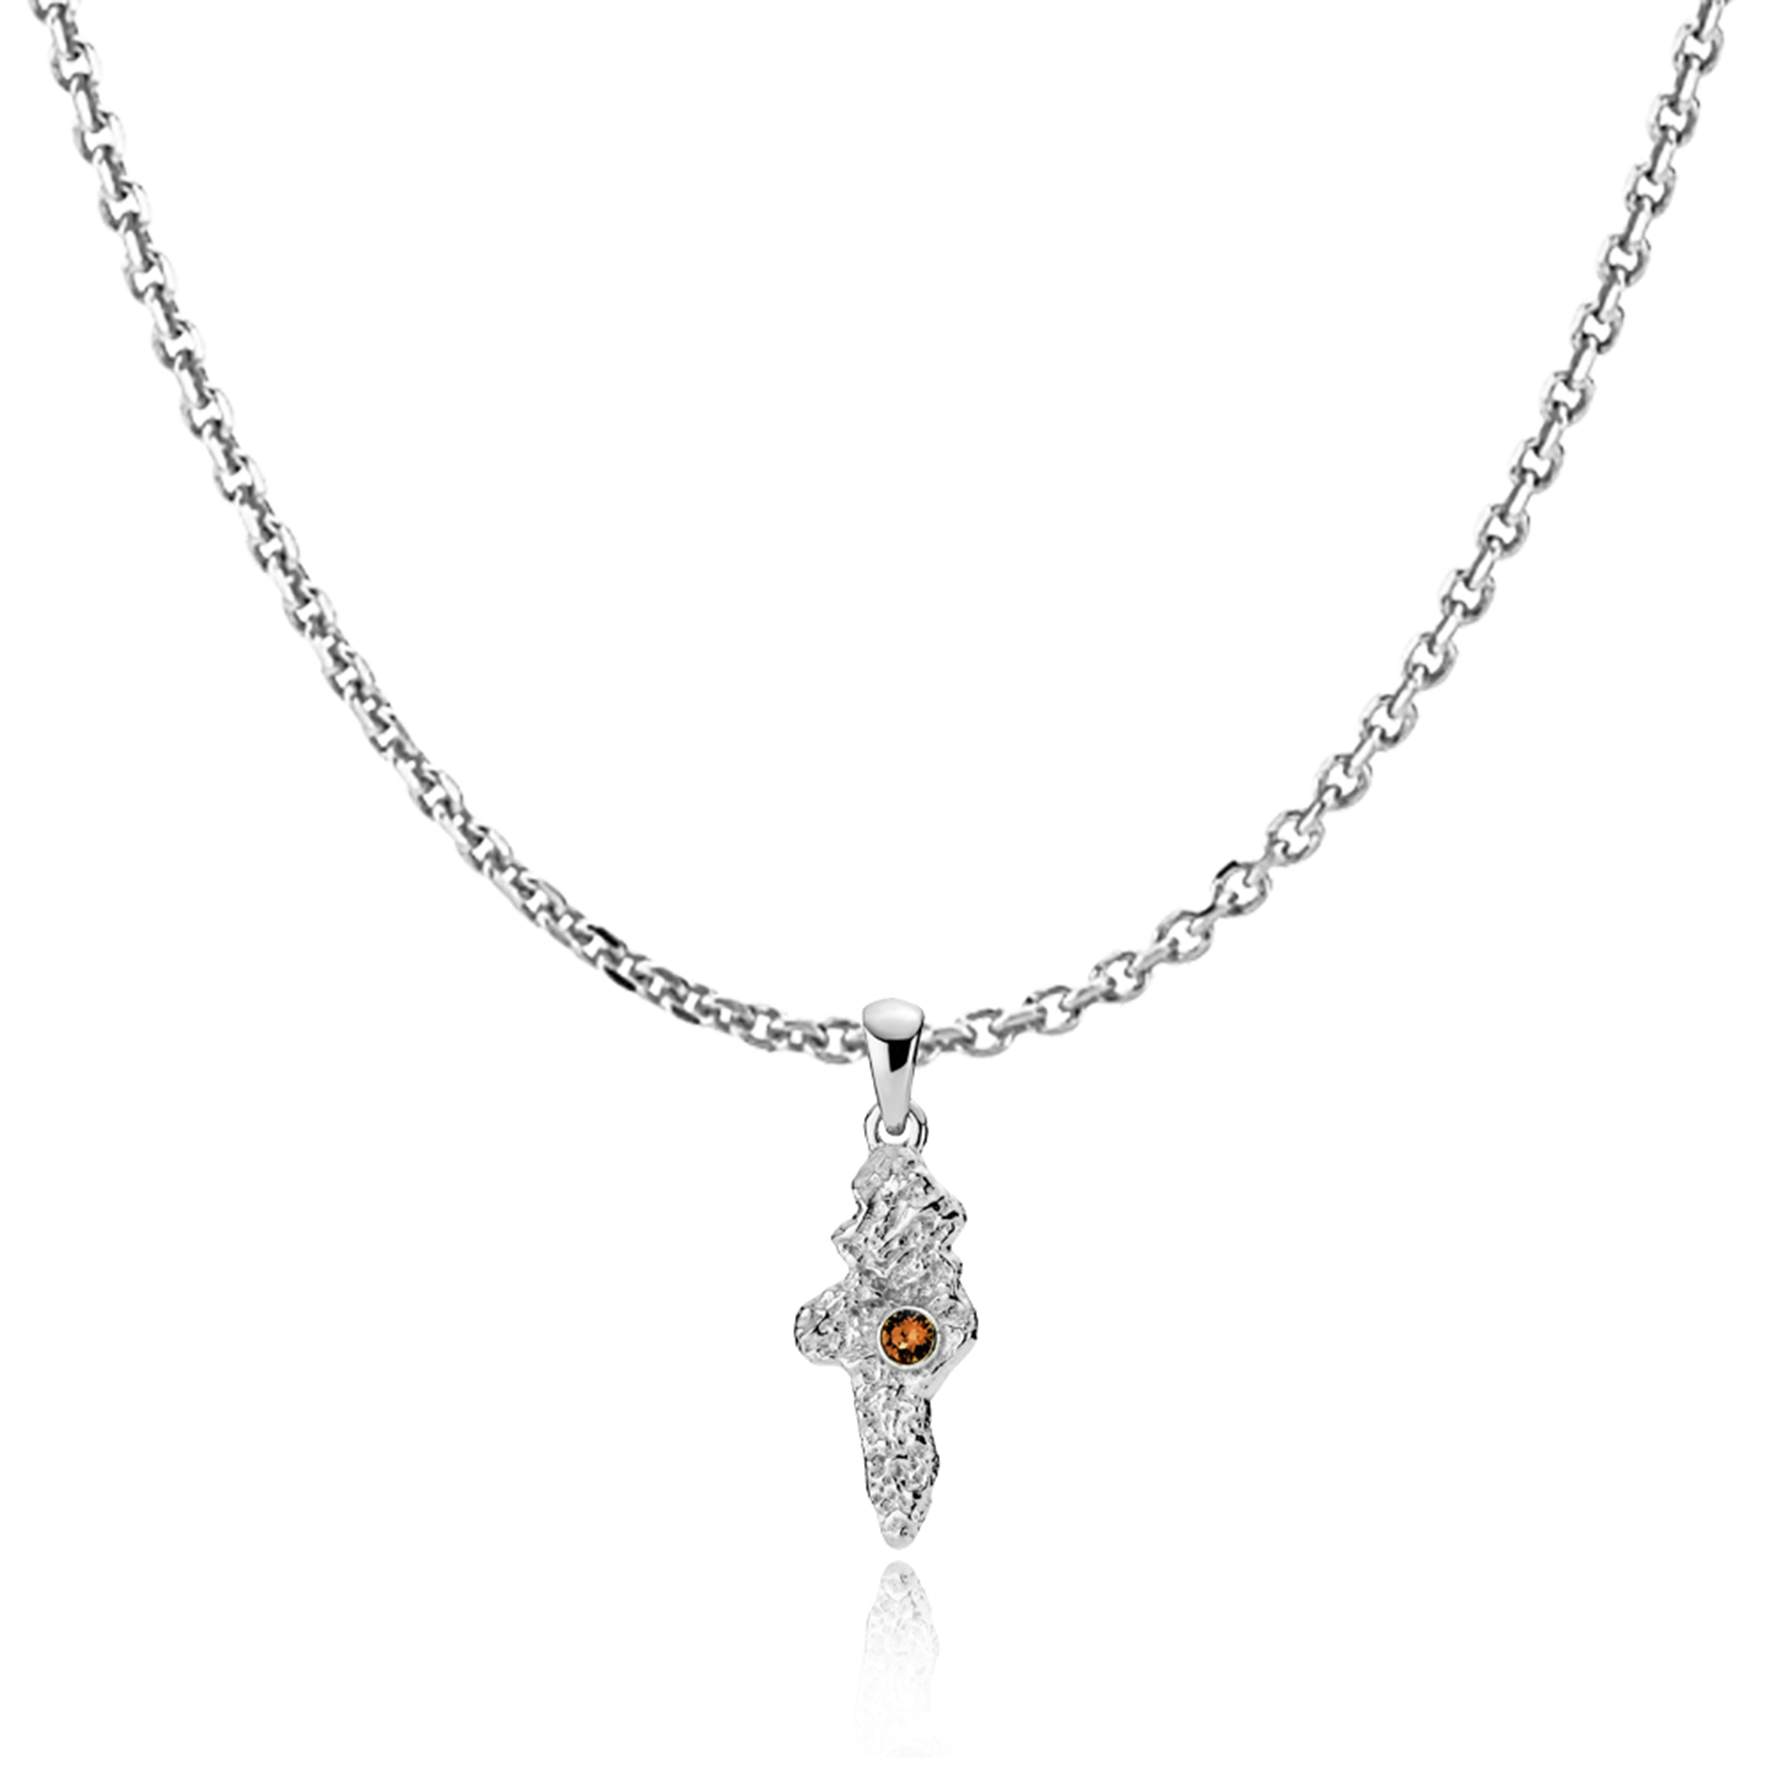 Silke By Sistie Pendant Necklace von Sistie in Silber Sterling 925|Blank